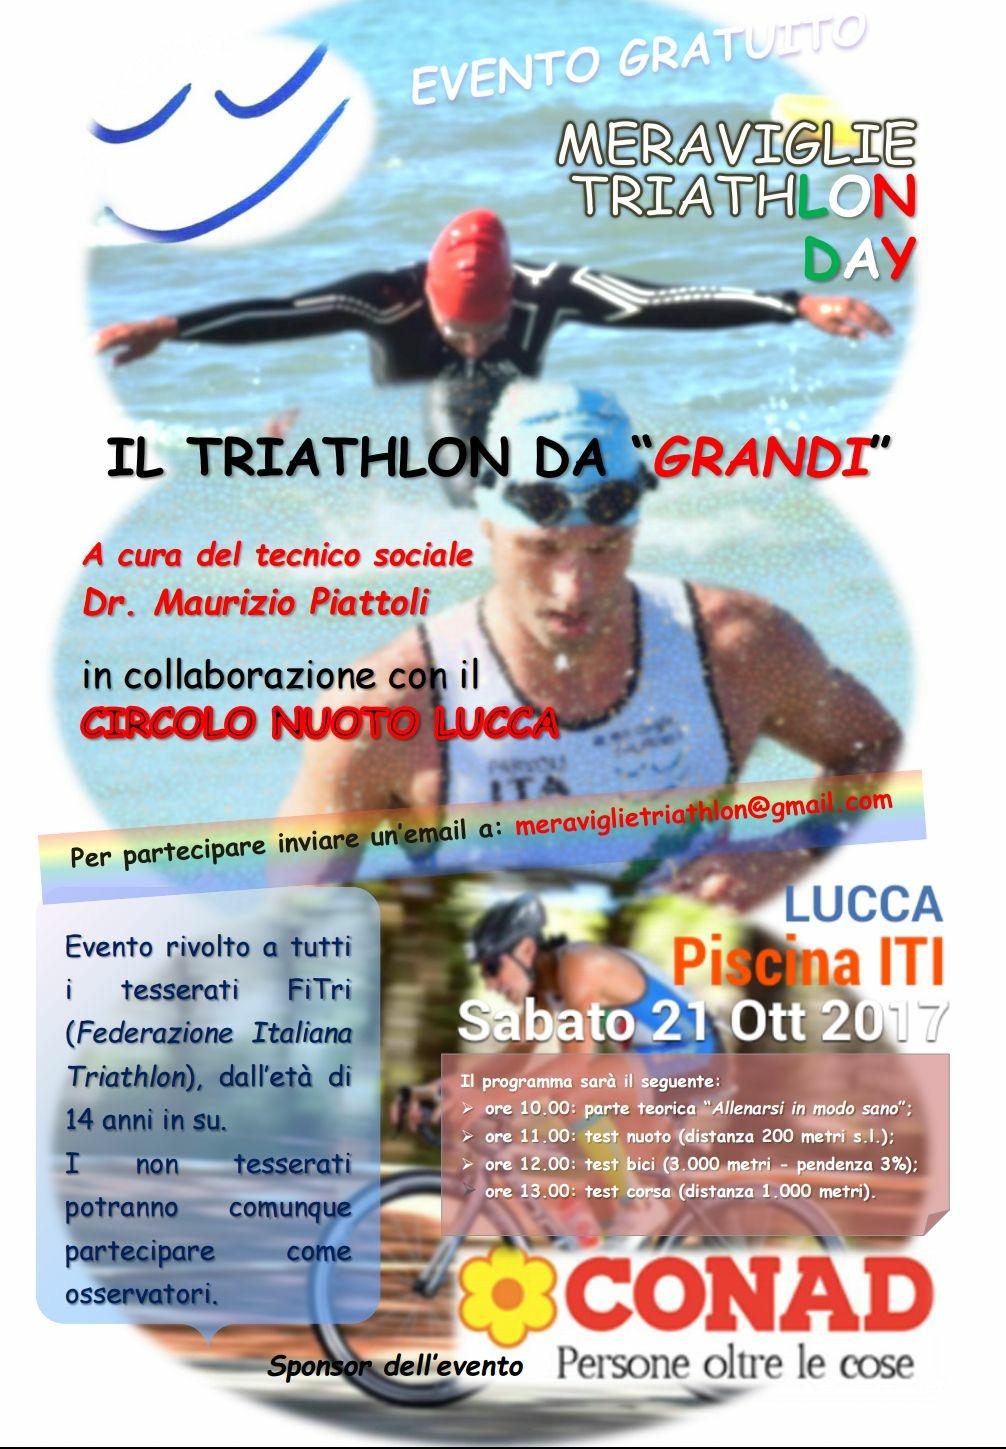 images/toscana/medium/Evento_Meraviglie_Triathlon.JPG